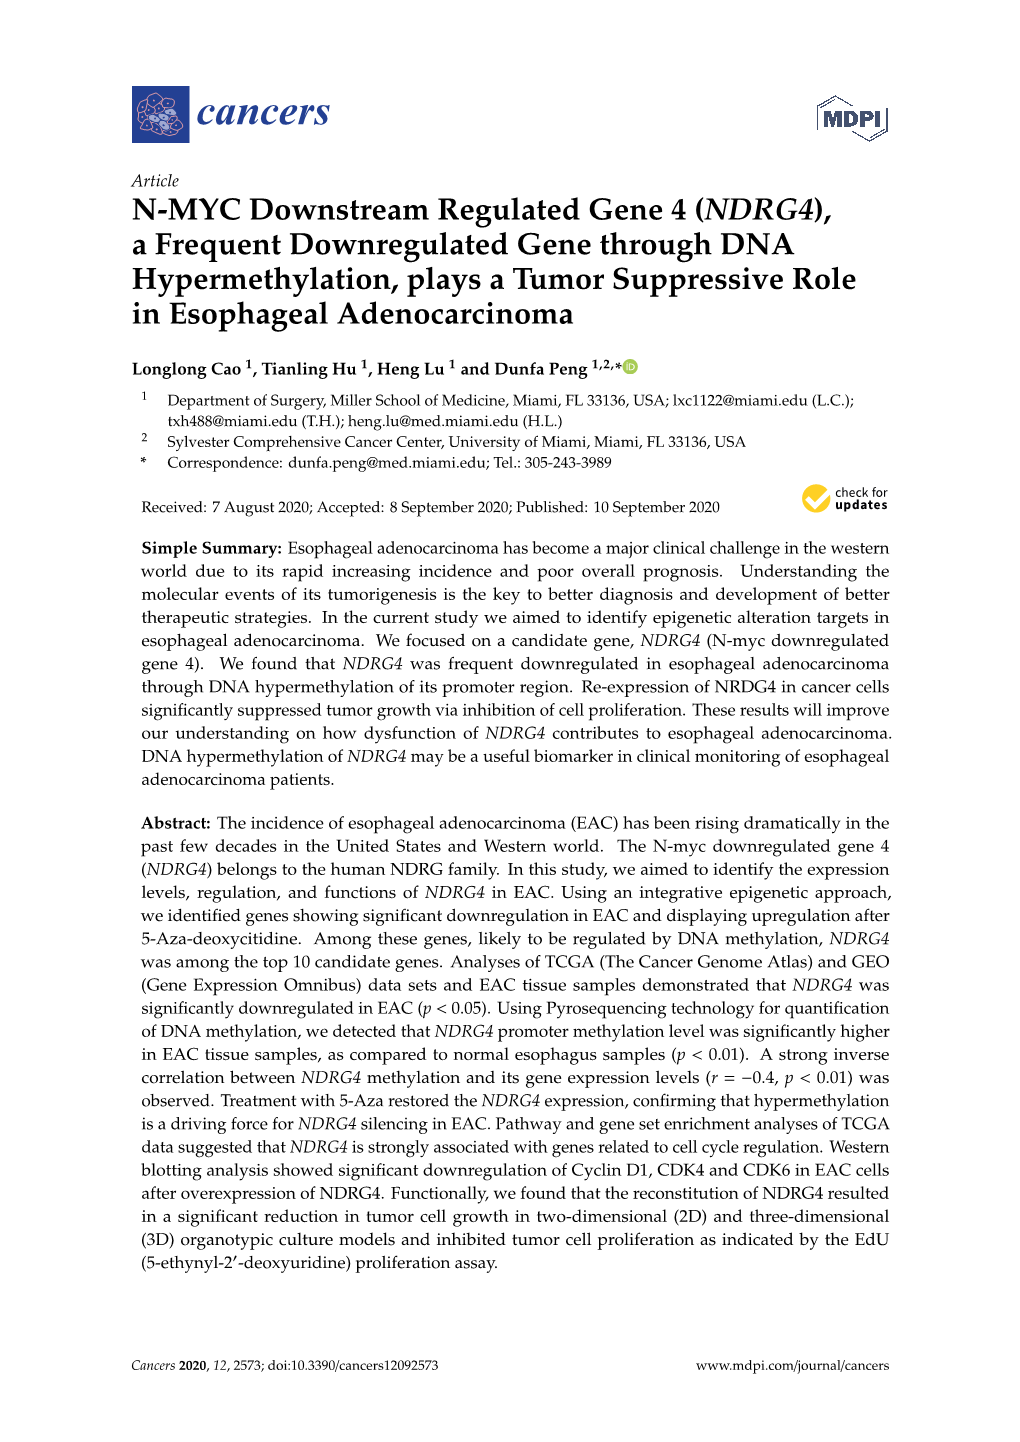 N-MYC Downstream Regulated Gene 4 (NDRG4), a Frequent Downregulated Gene Through DNA Hypermethylation, Plays a Tumor Suppressive Role in Esophageal Adenocarcinoma